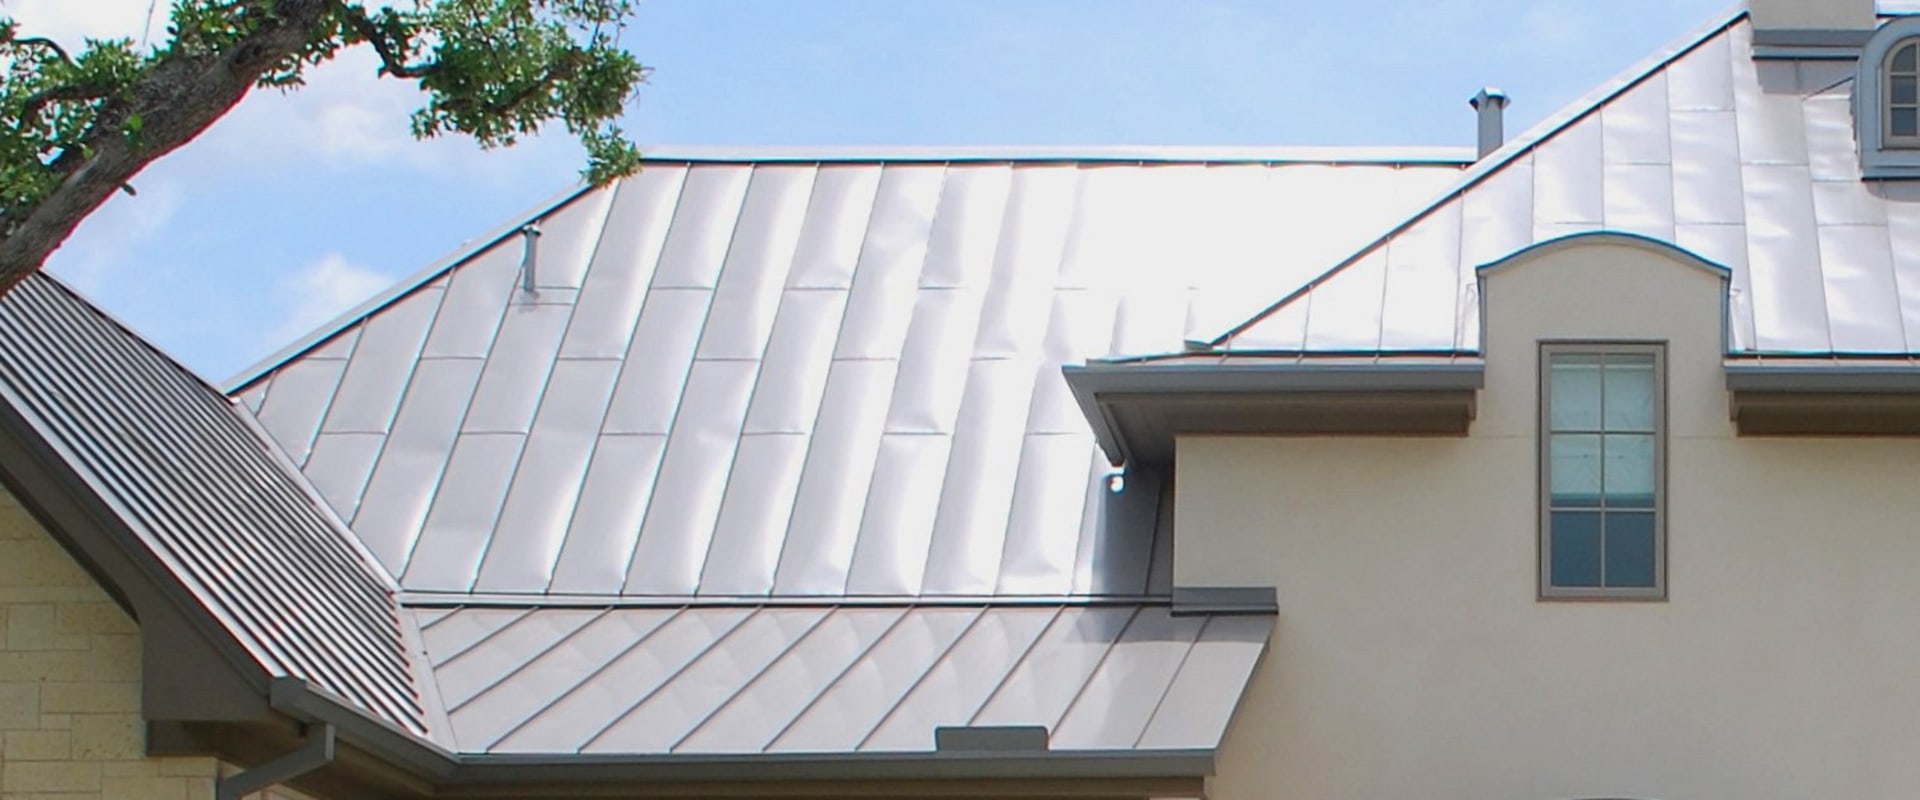 Do metal roofs repel heat?